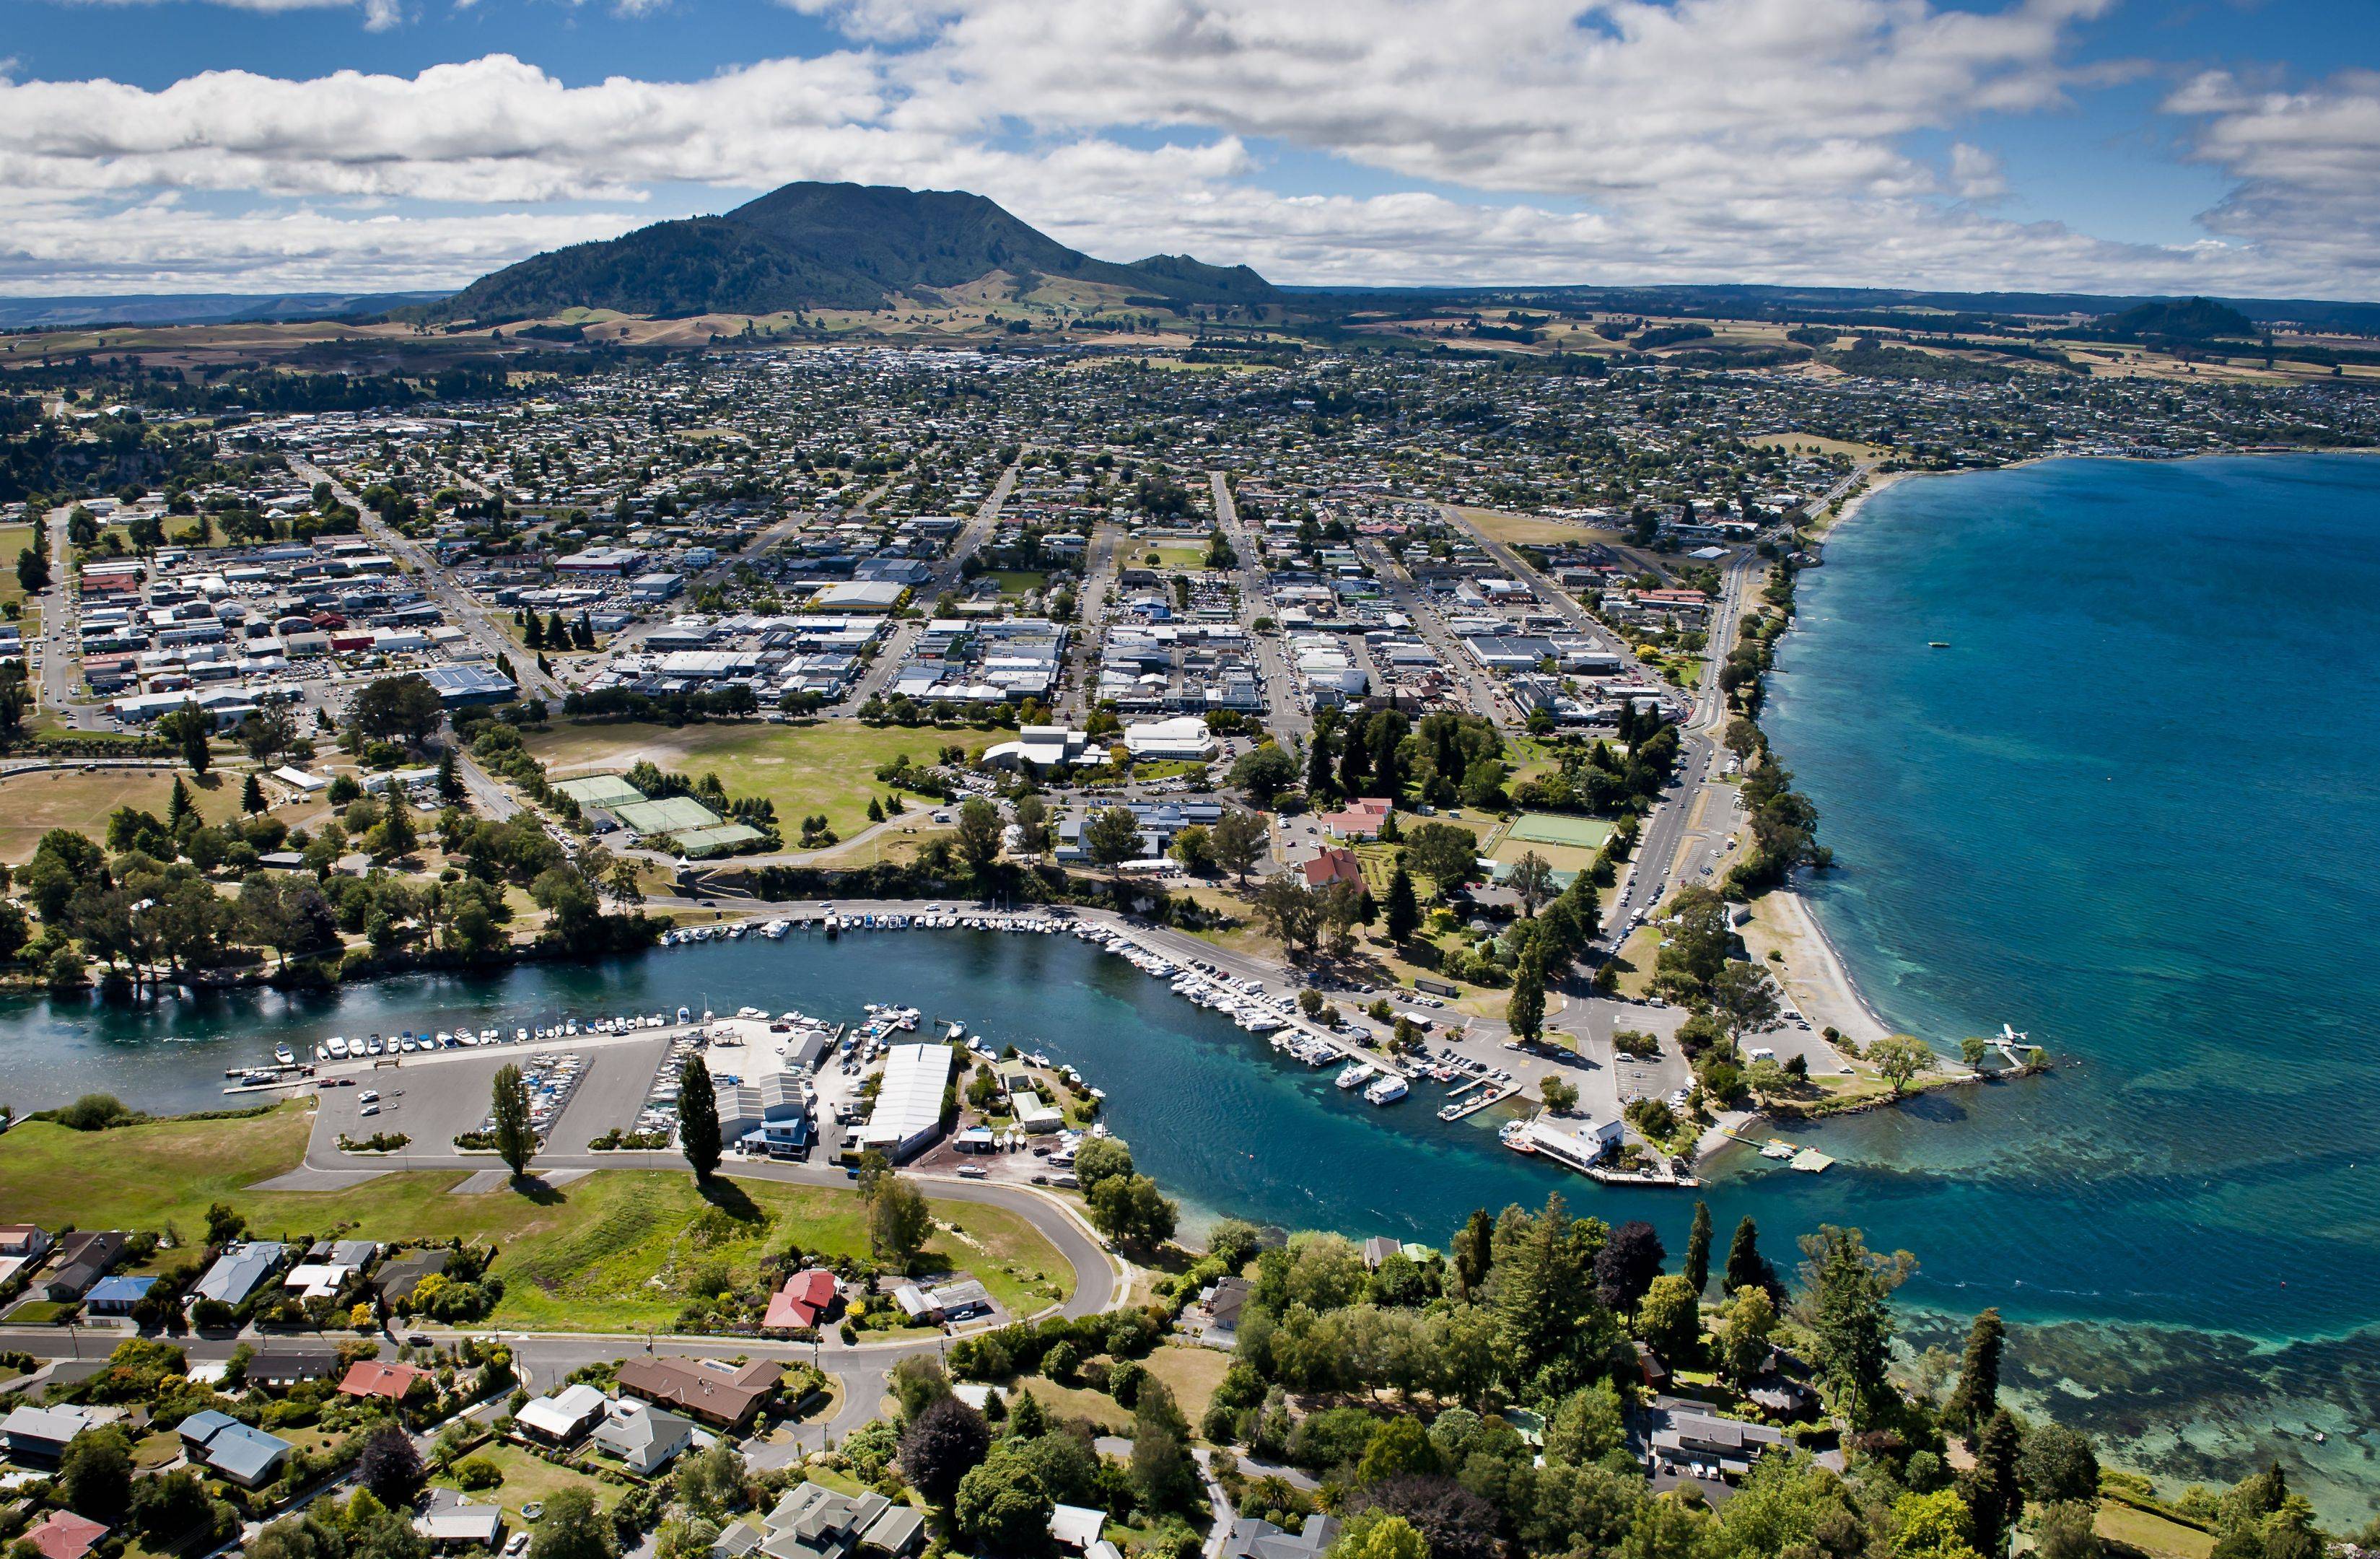 Taupo: hermosa ciudad con lago e impresionantes montañas 